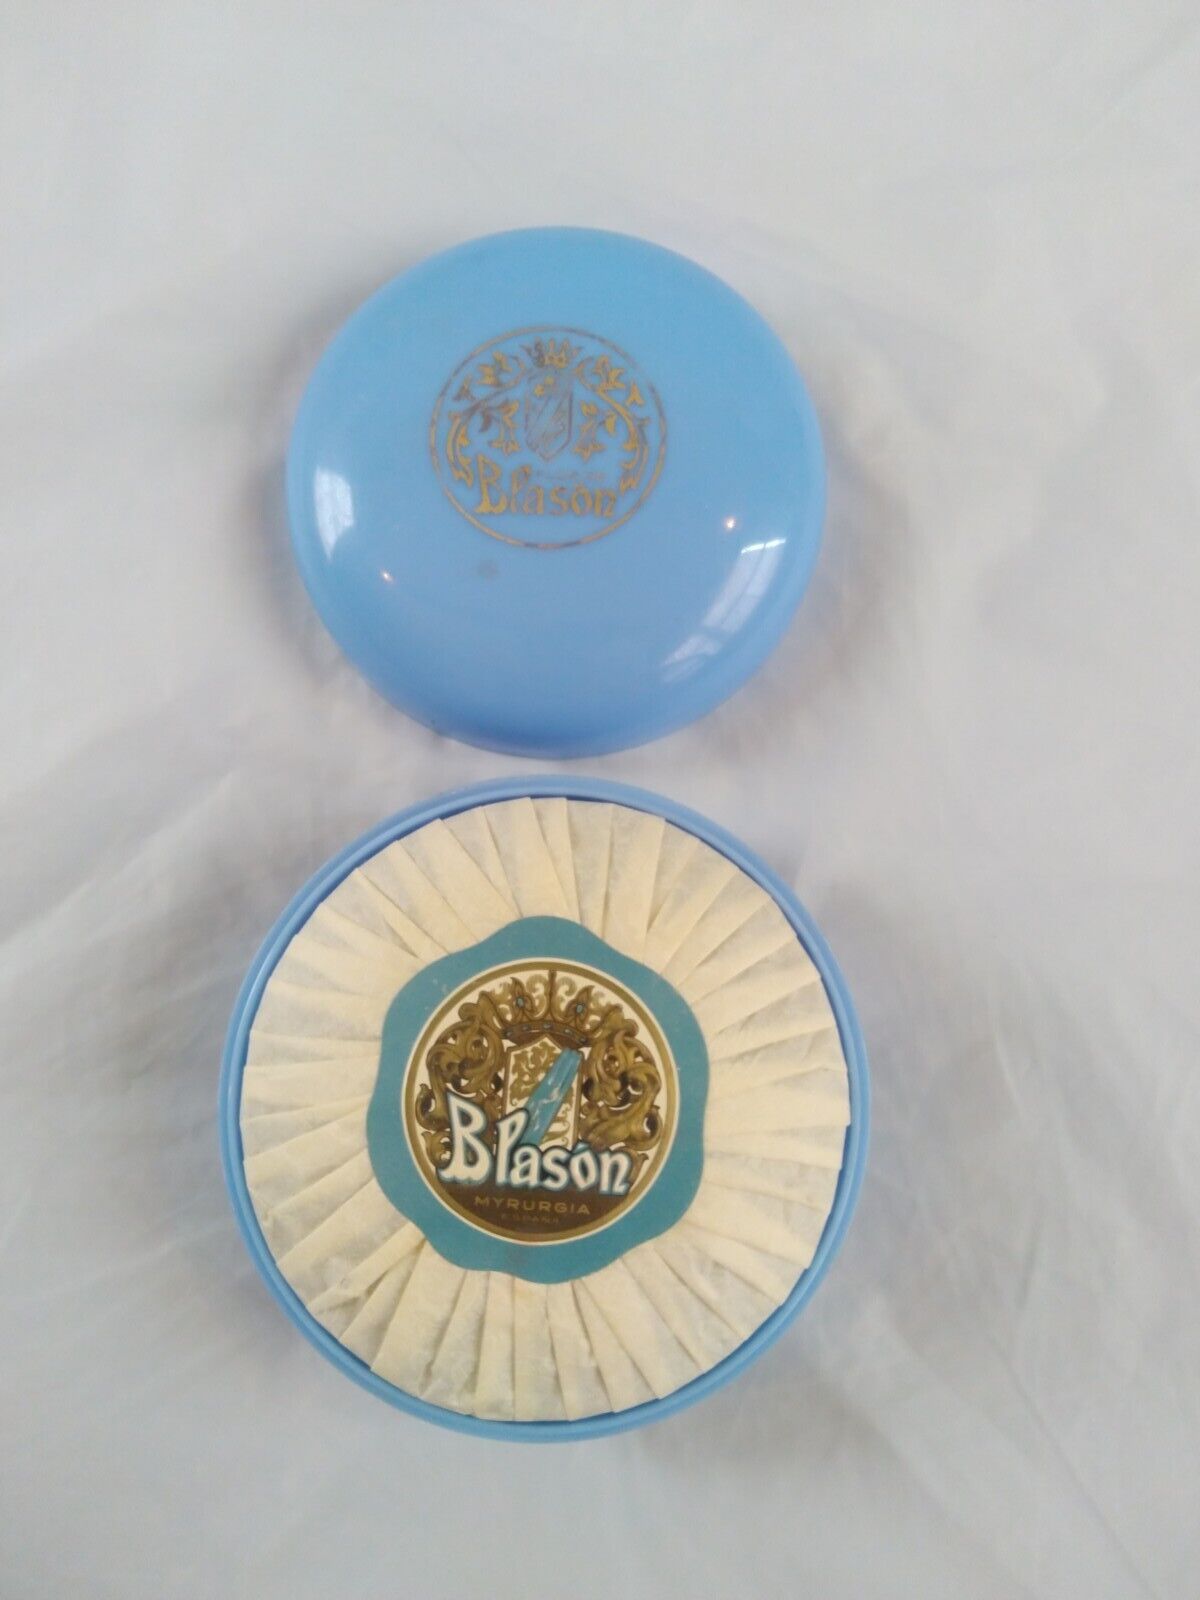 RARE Vtg Flor de Blason Myrurgia Bath Soap 5 oz With Plastic Case Made In Spain